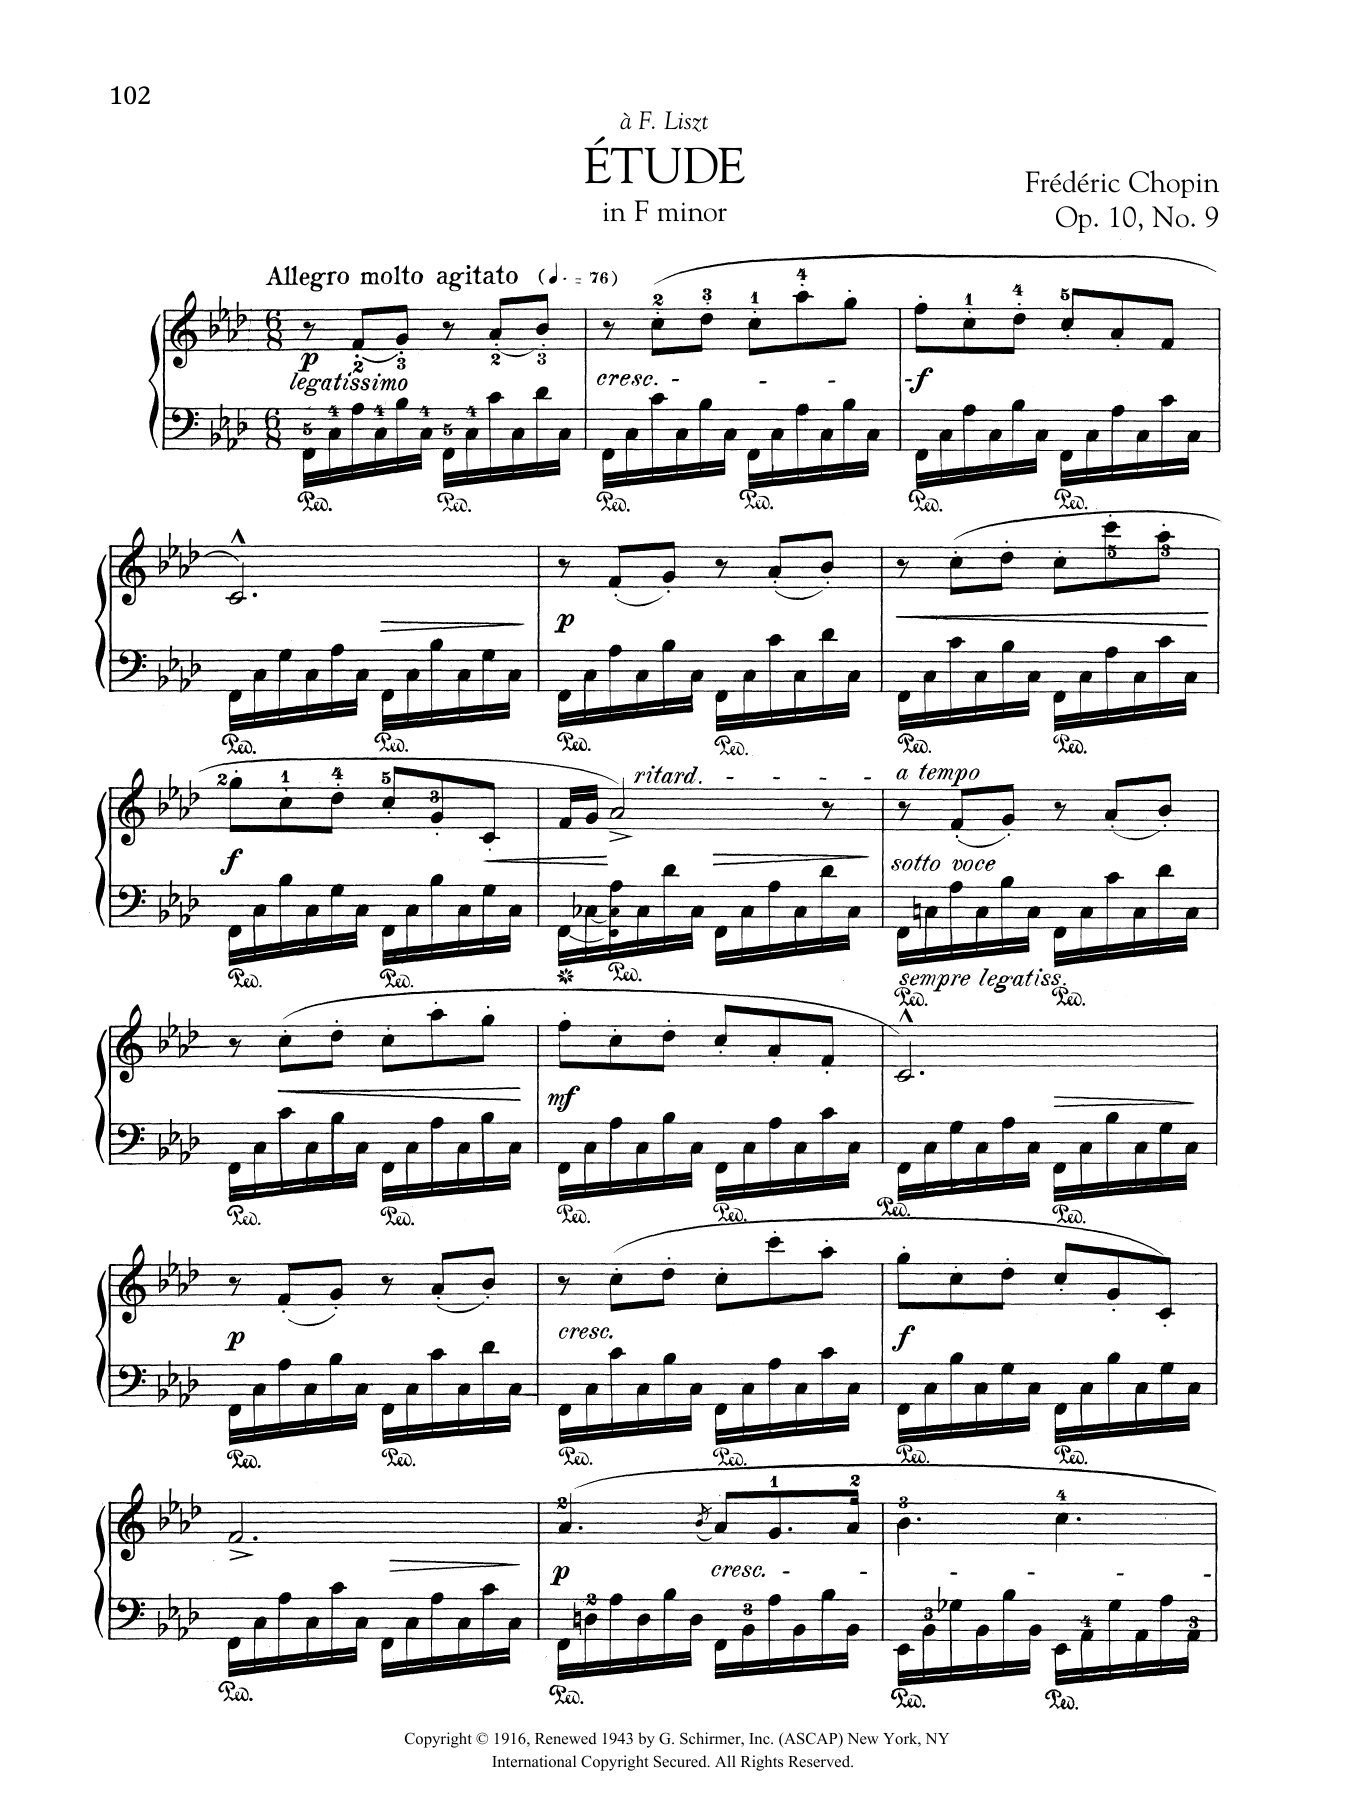 Etude in F minor, Op. 10, No. 9 sheet music